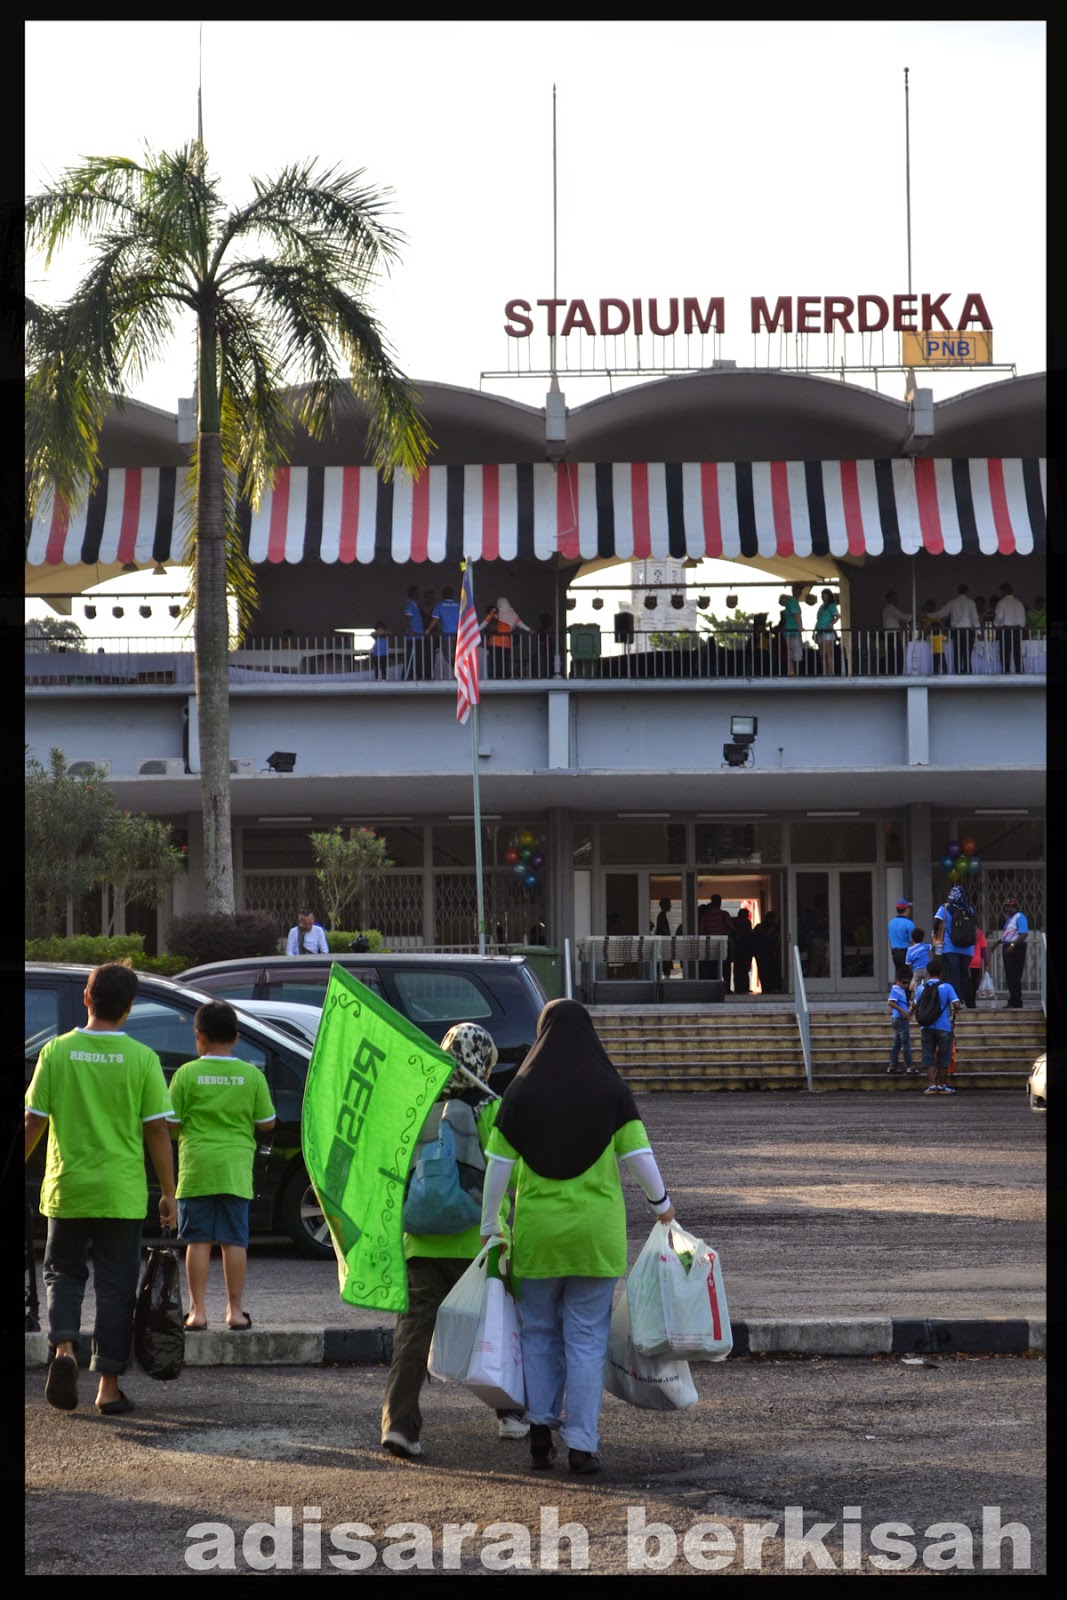 Adisarah berkisah: Talisman Family Day 2014 di Stadium 